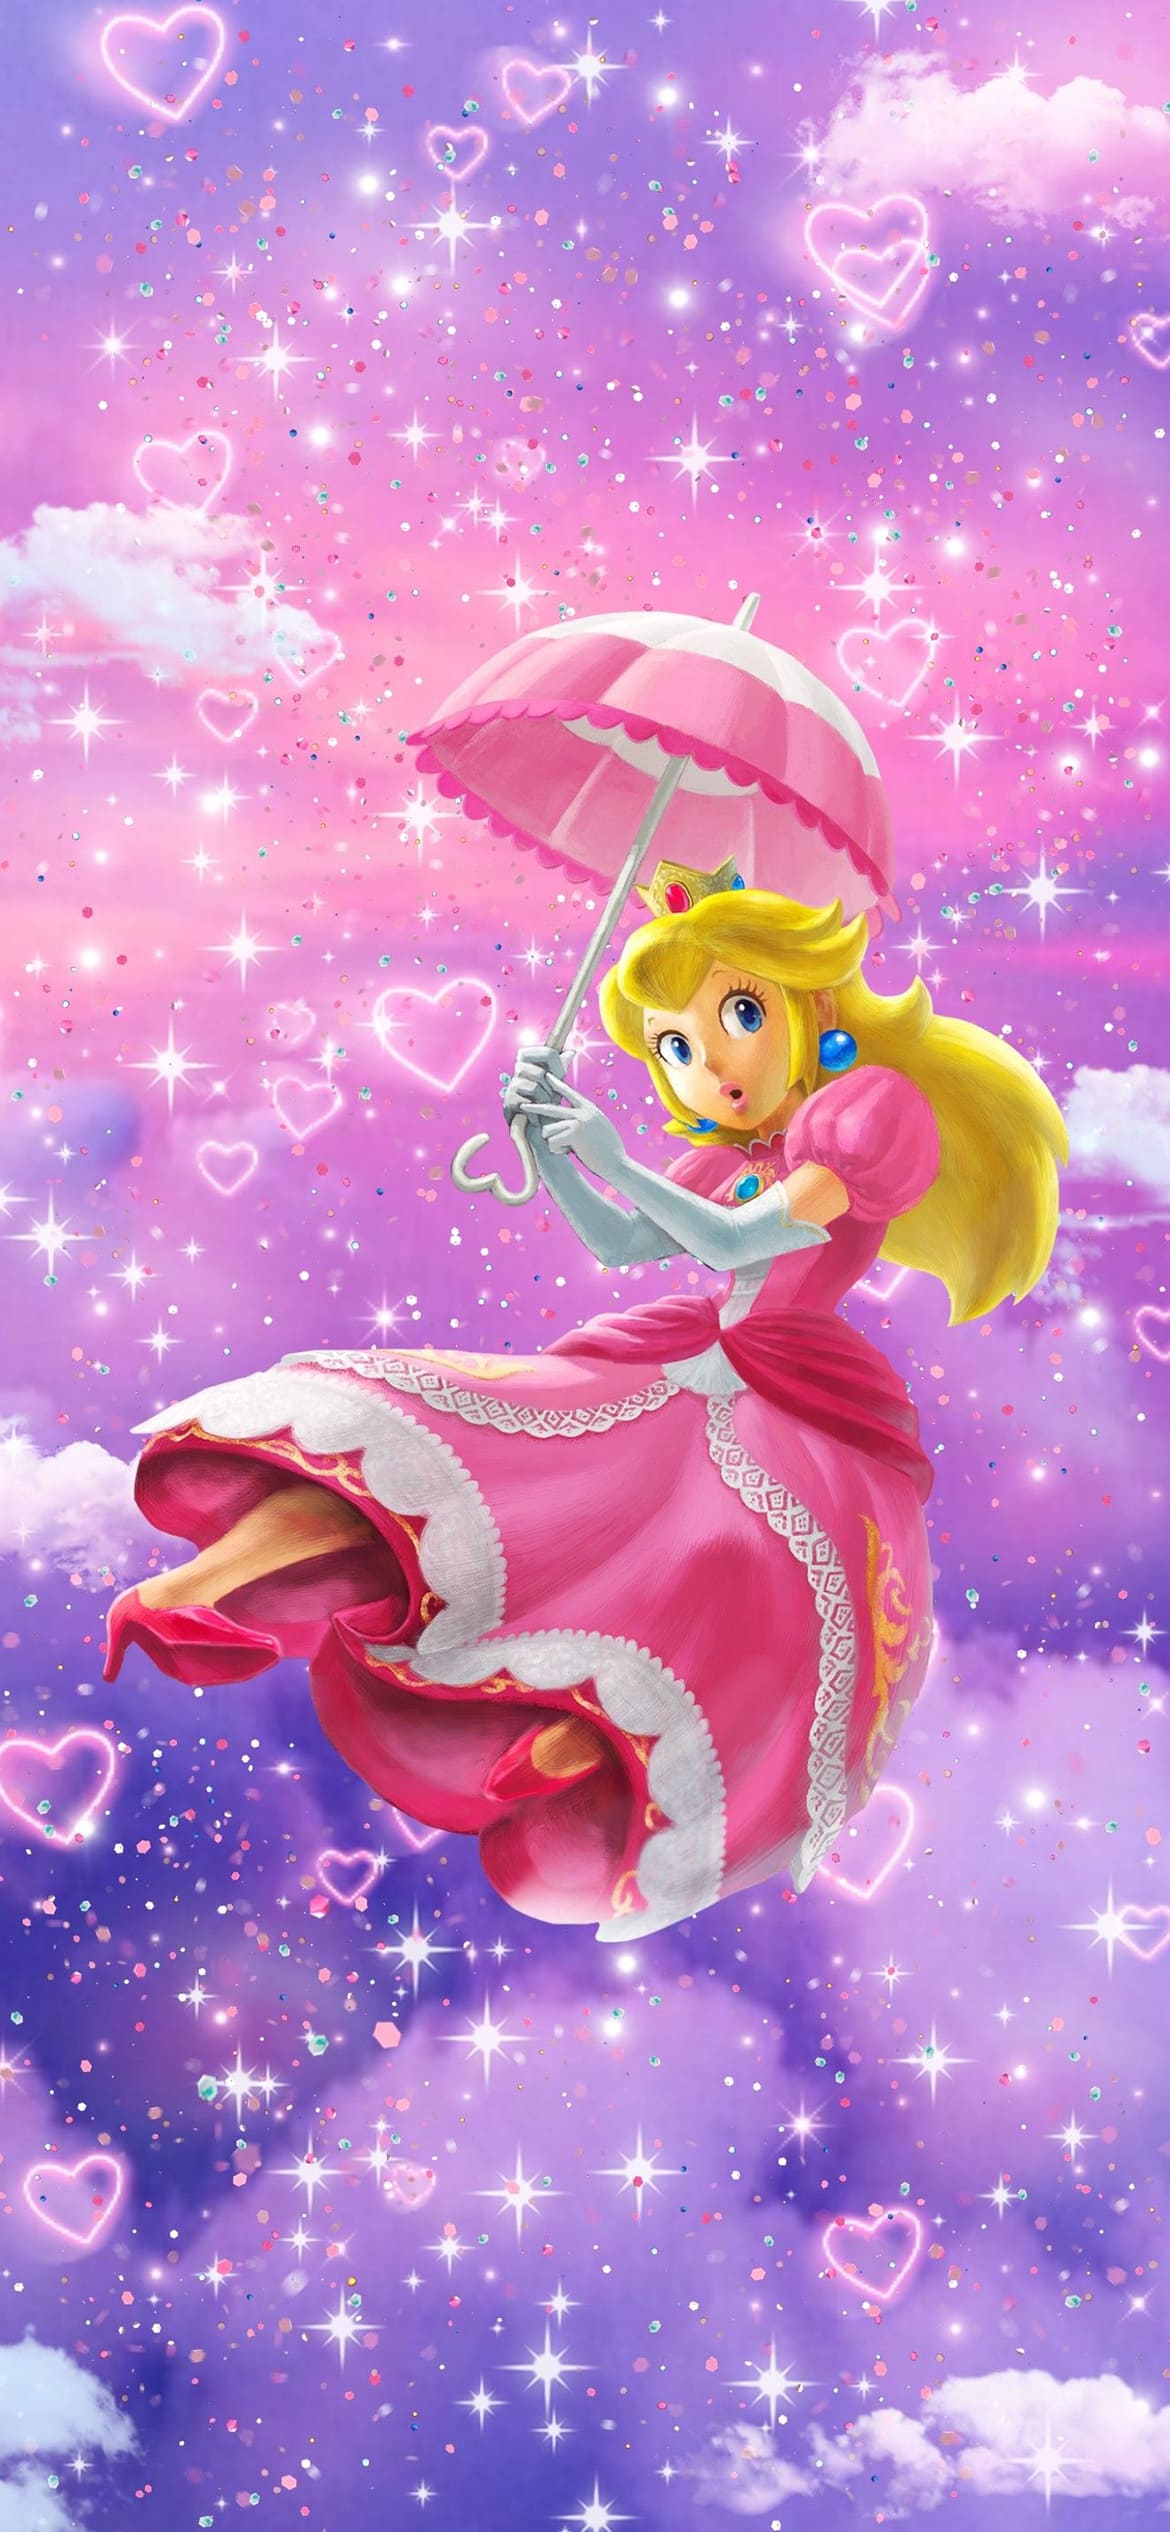 A cartoon character holding an umbrella in the sky - Princess Peach